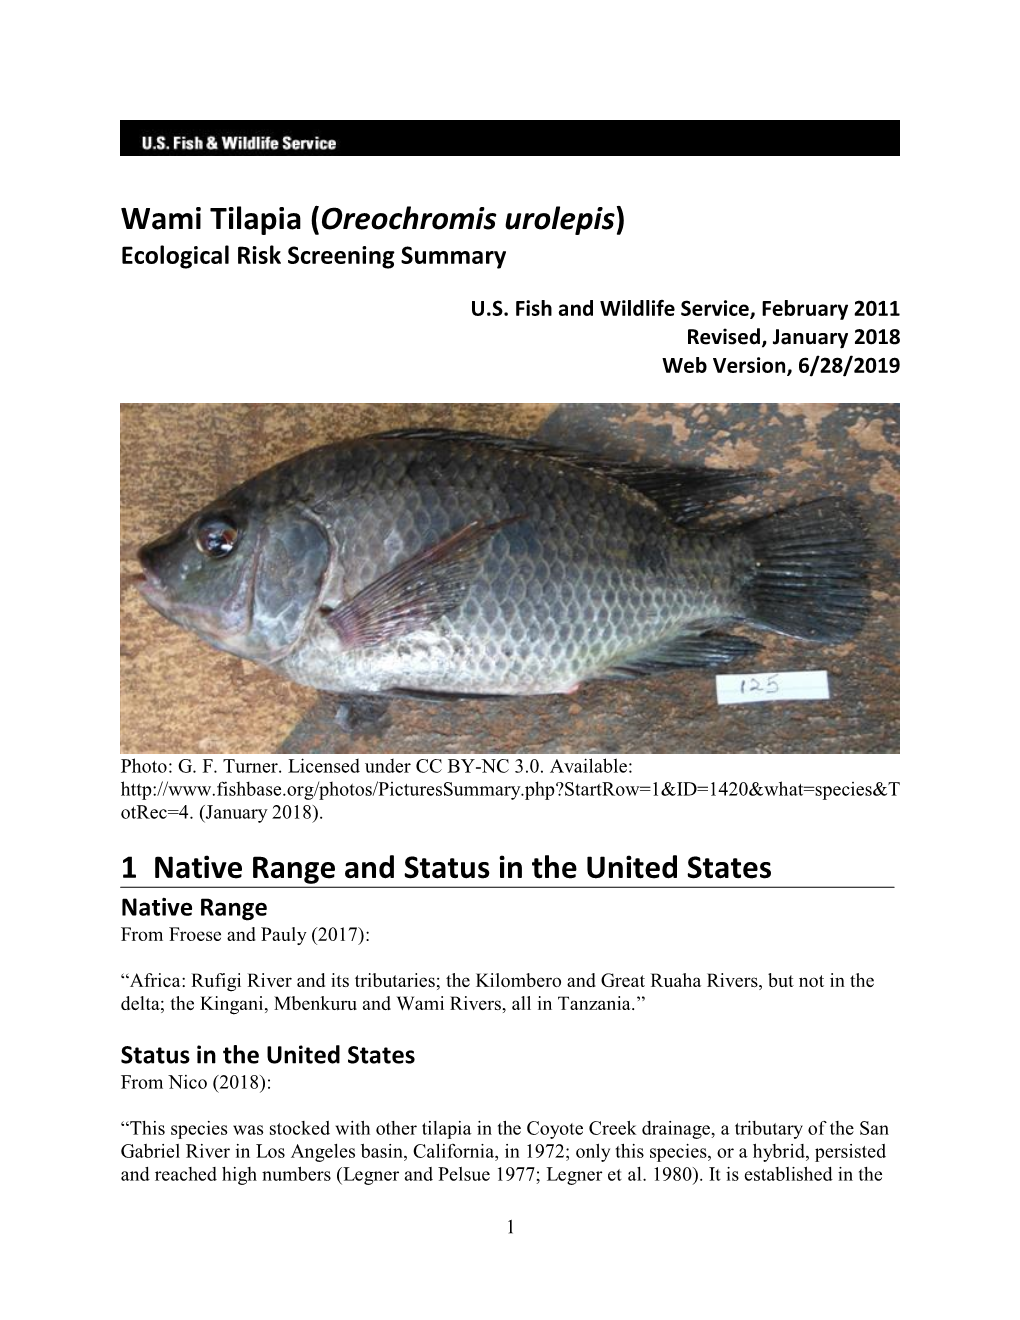 Oreochromis Urolepis) Ecological Risk Screening Summary